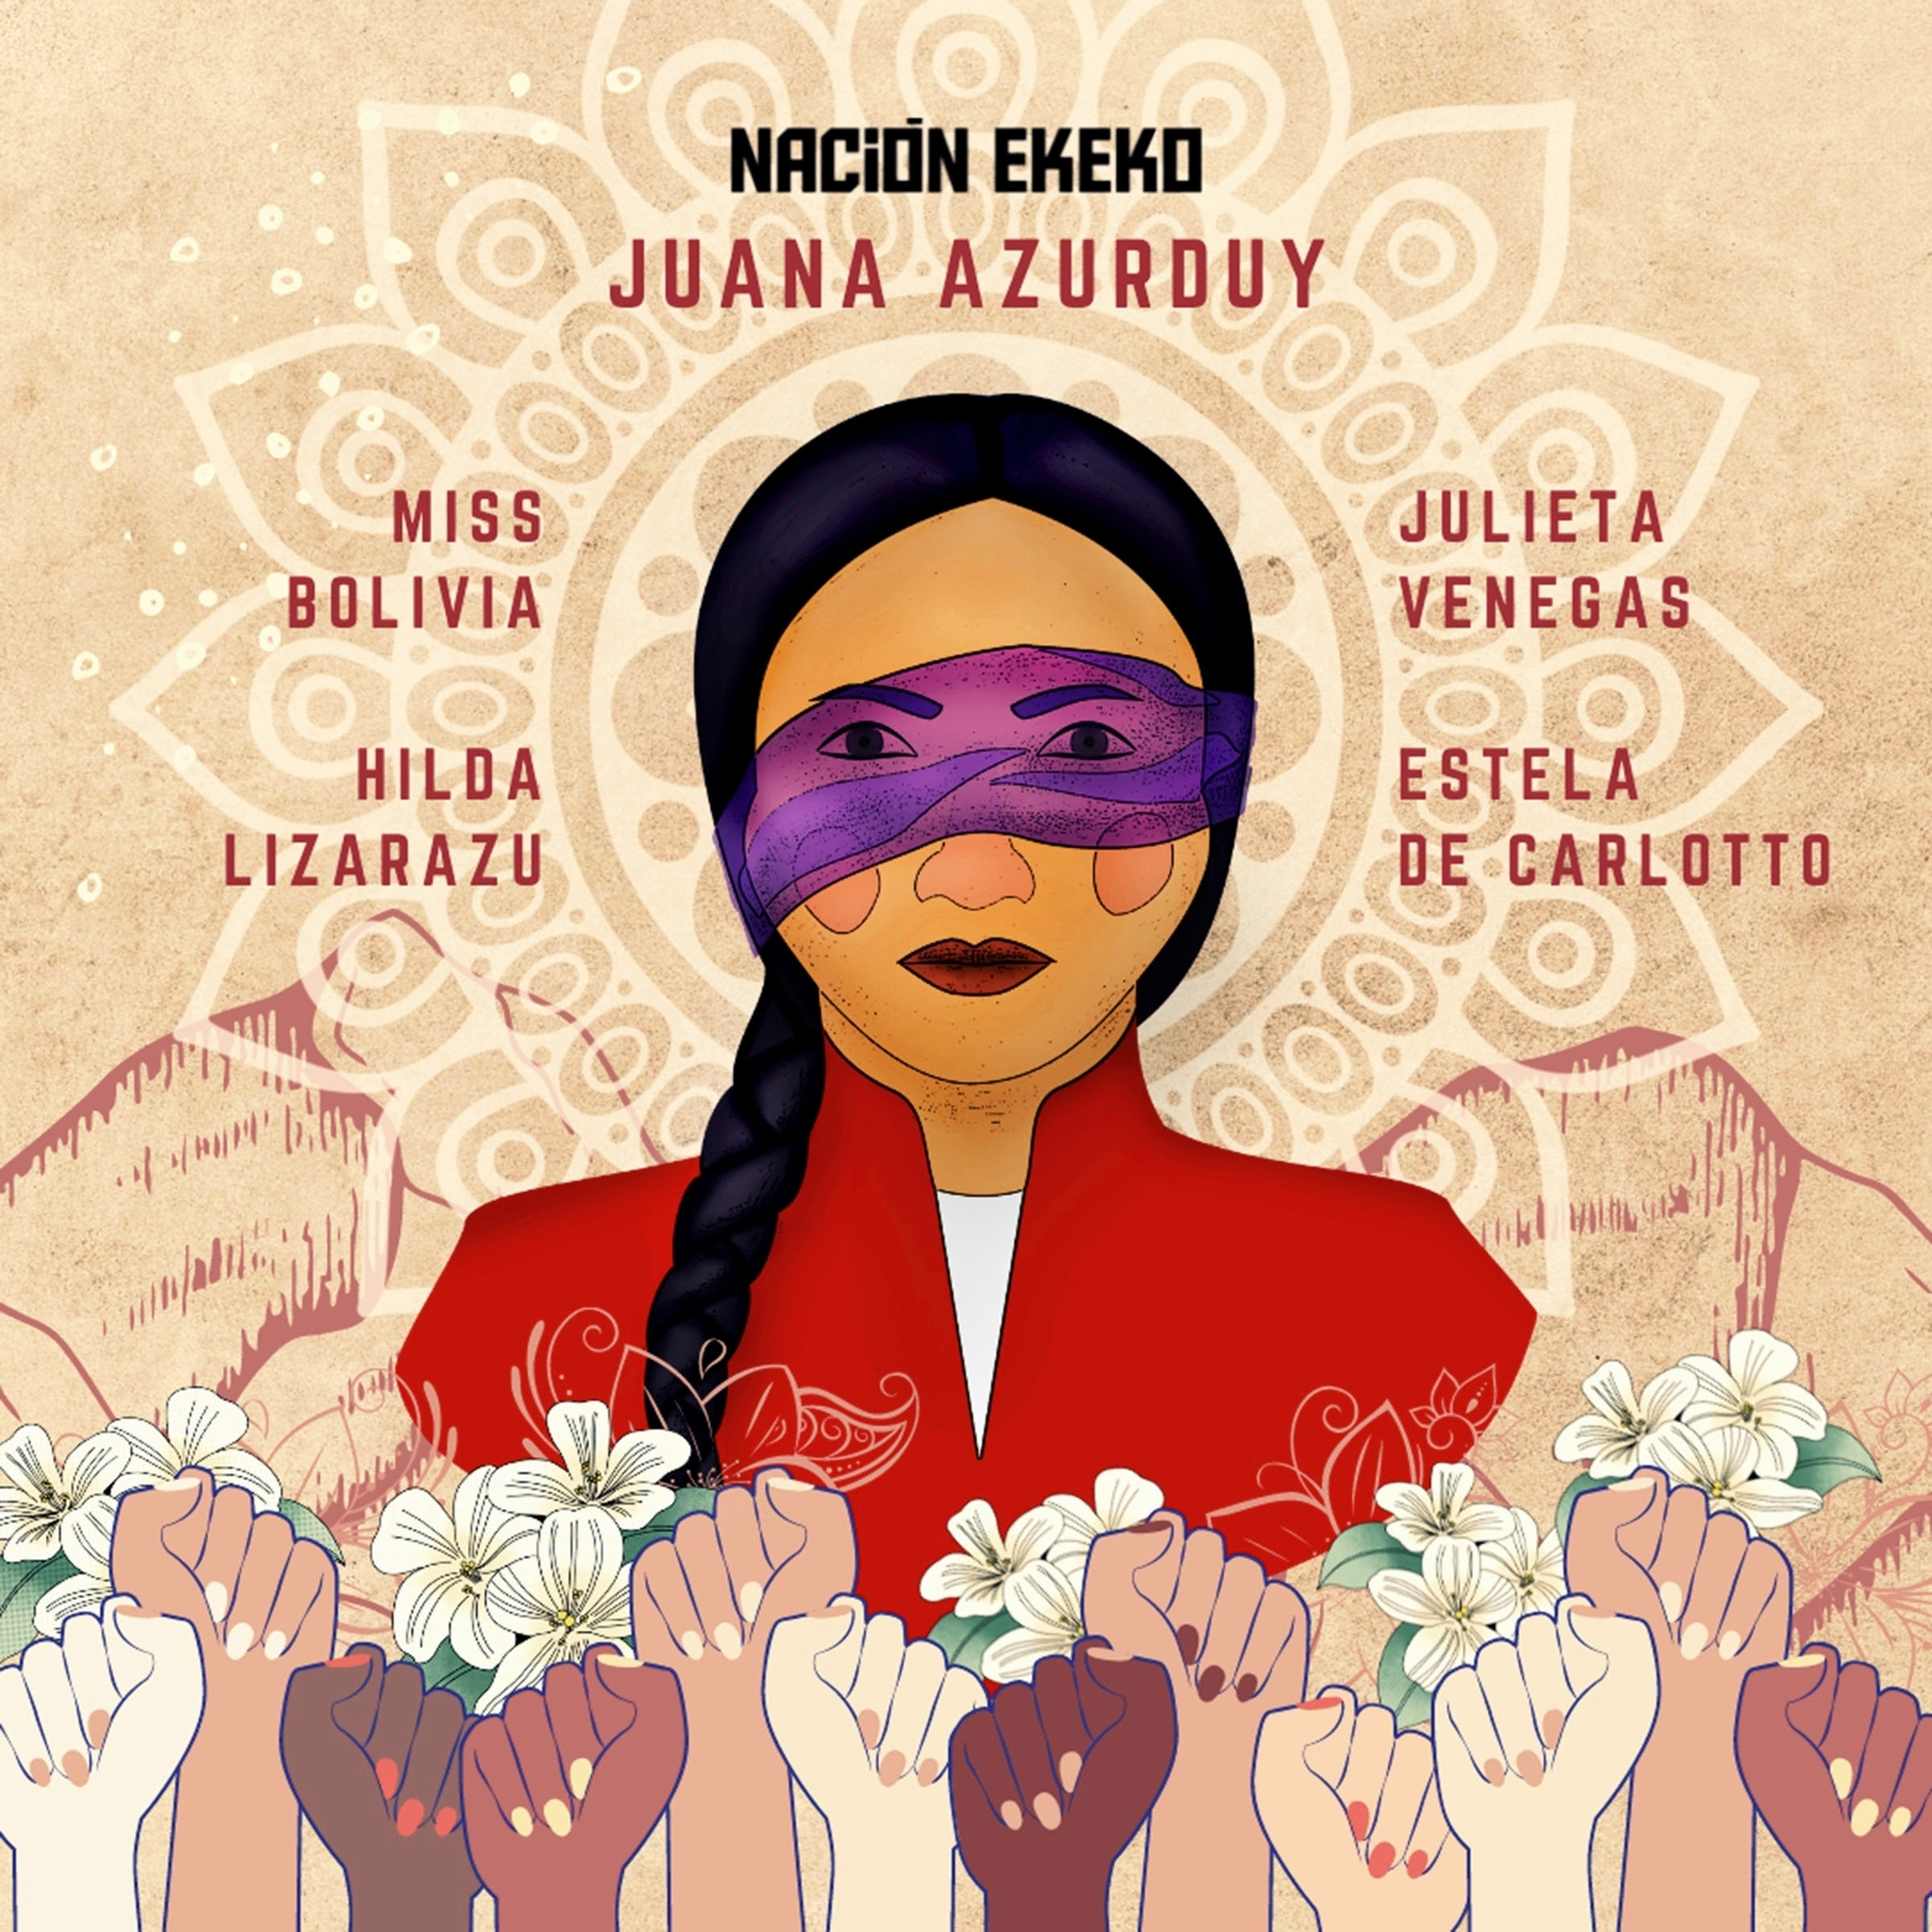 «Juana Azurduy» reúne a Nación Ekeko, Hilda Lizarazu, Julieta Venegas, Estela de Carlotto y Miss Bolivia